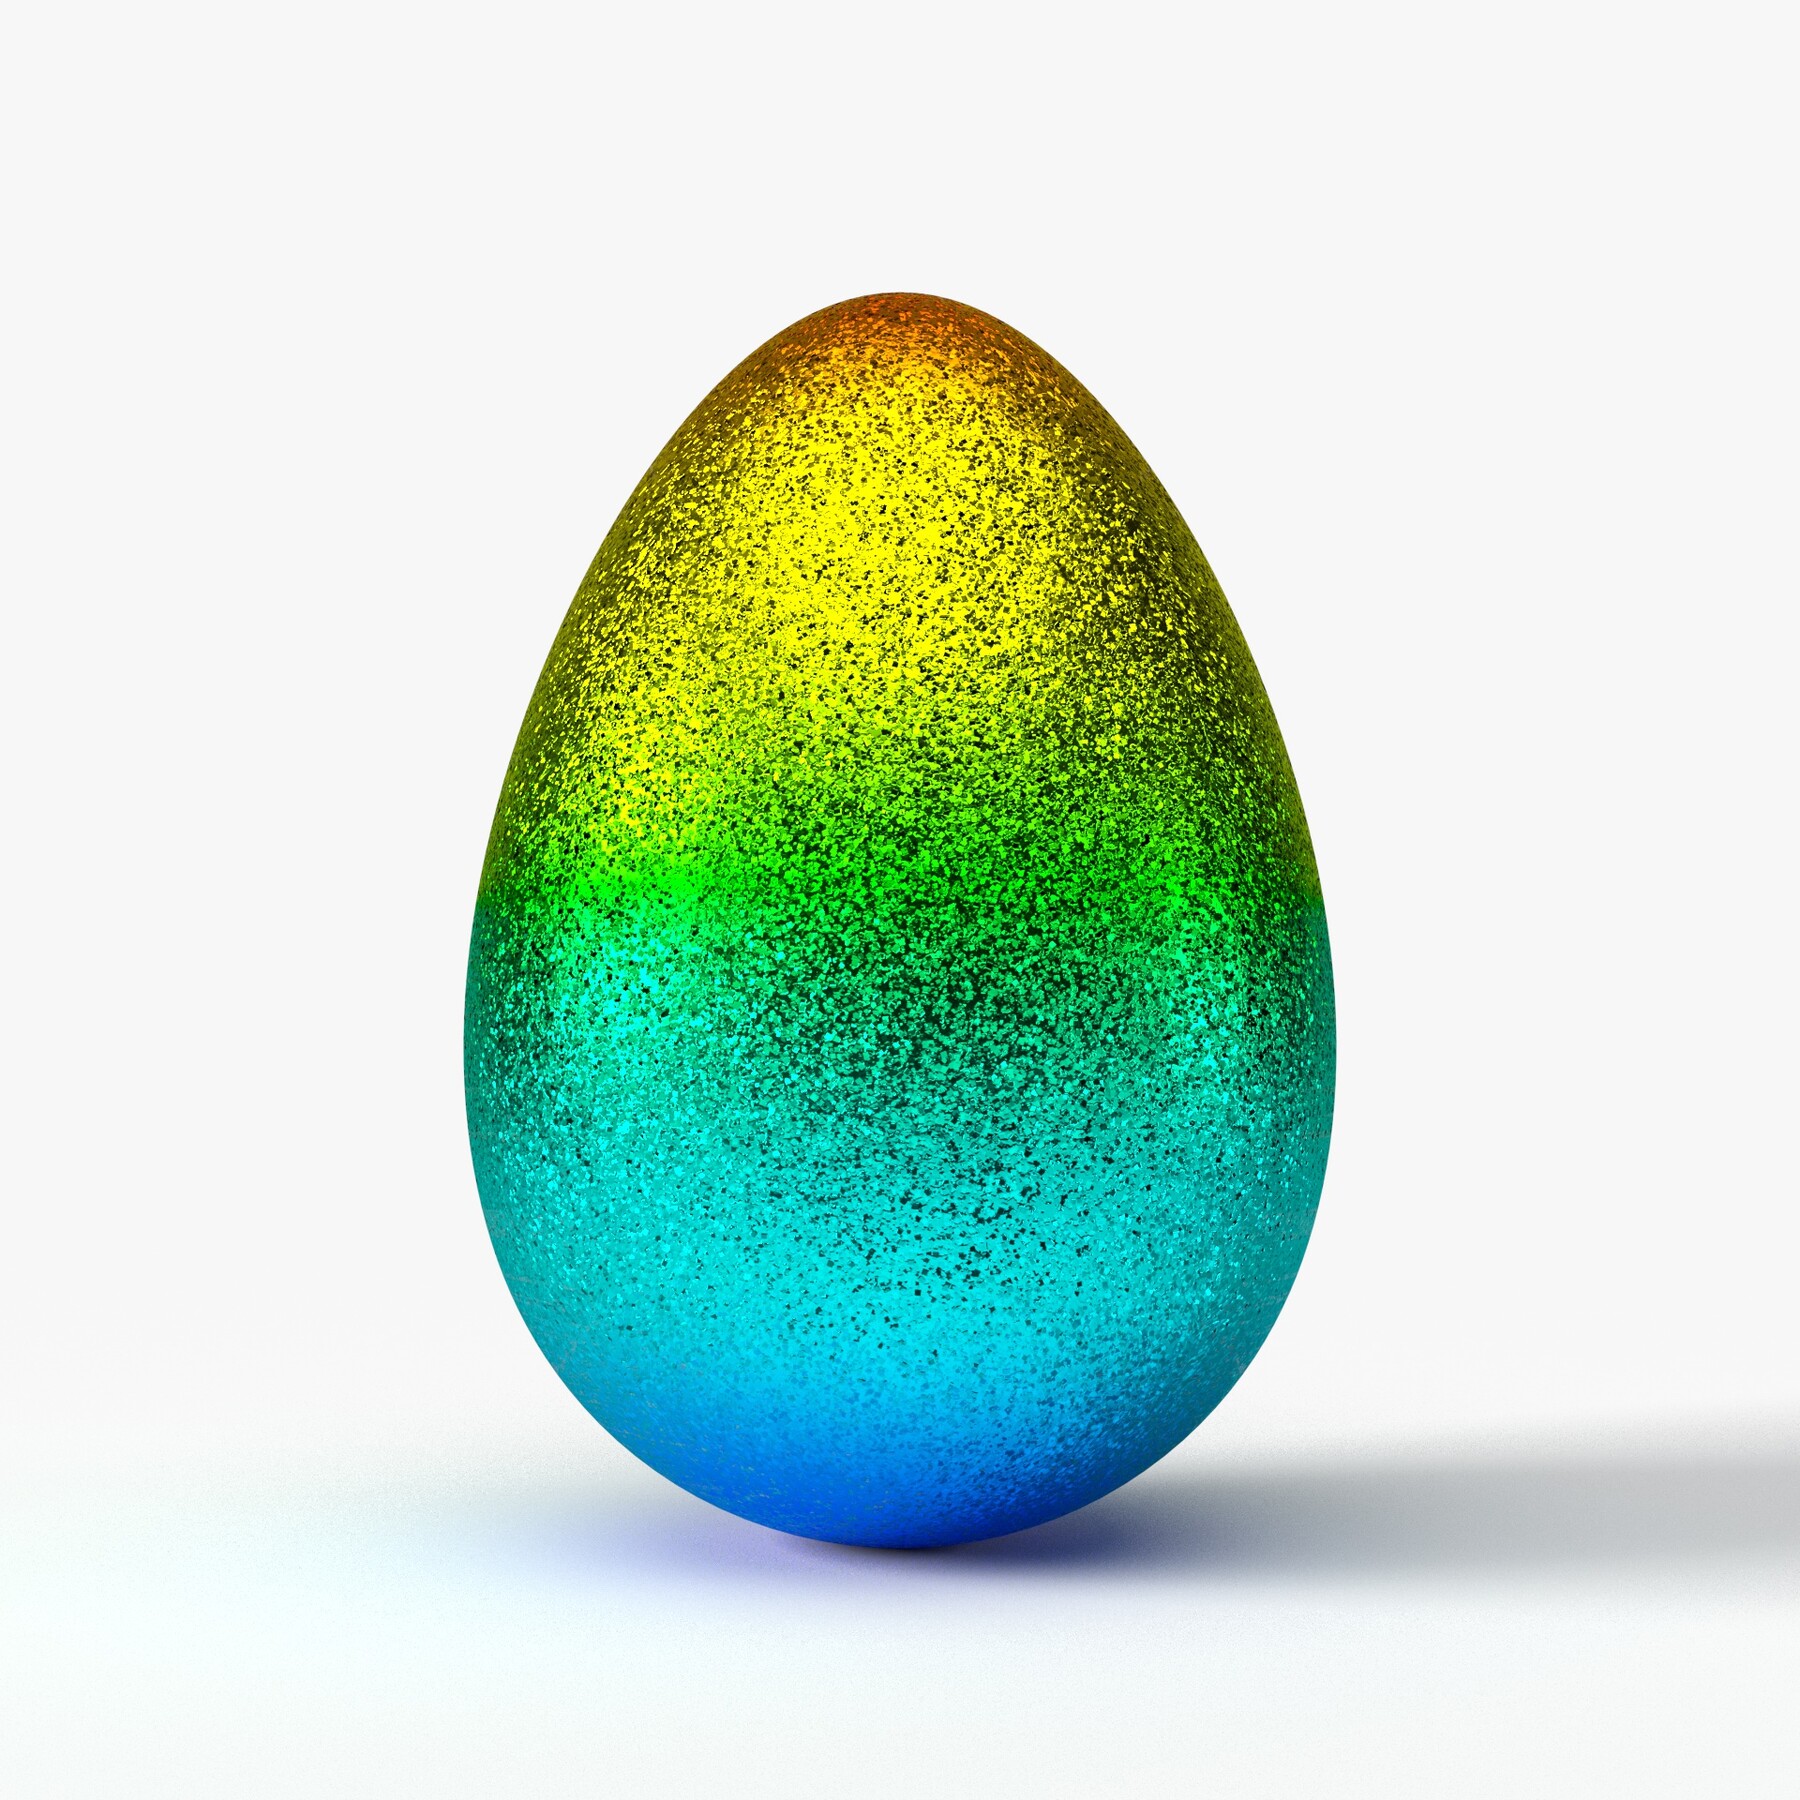 ArtStation - Glittering easter egg with gradient colors in 4K PBR ...